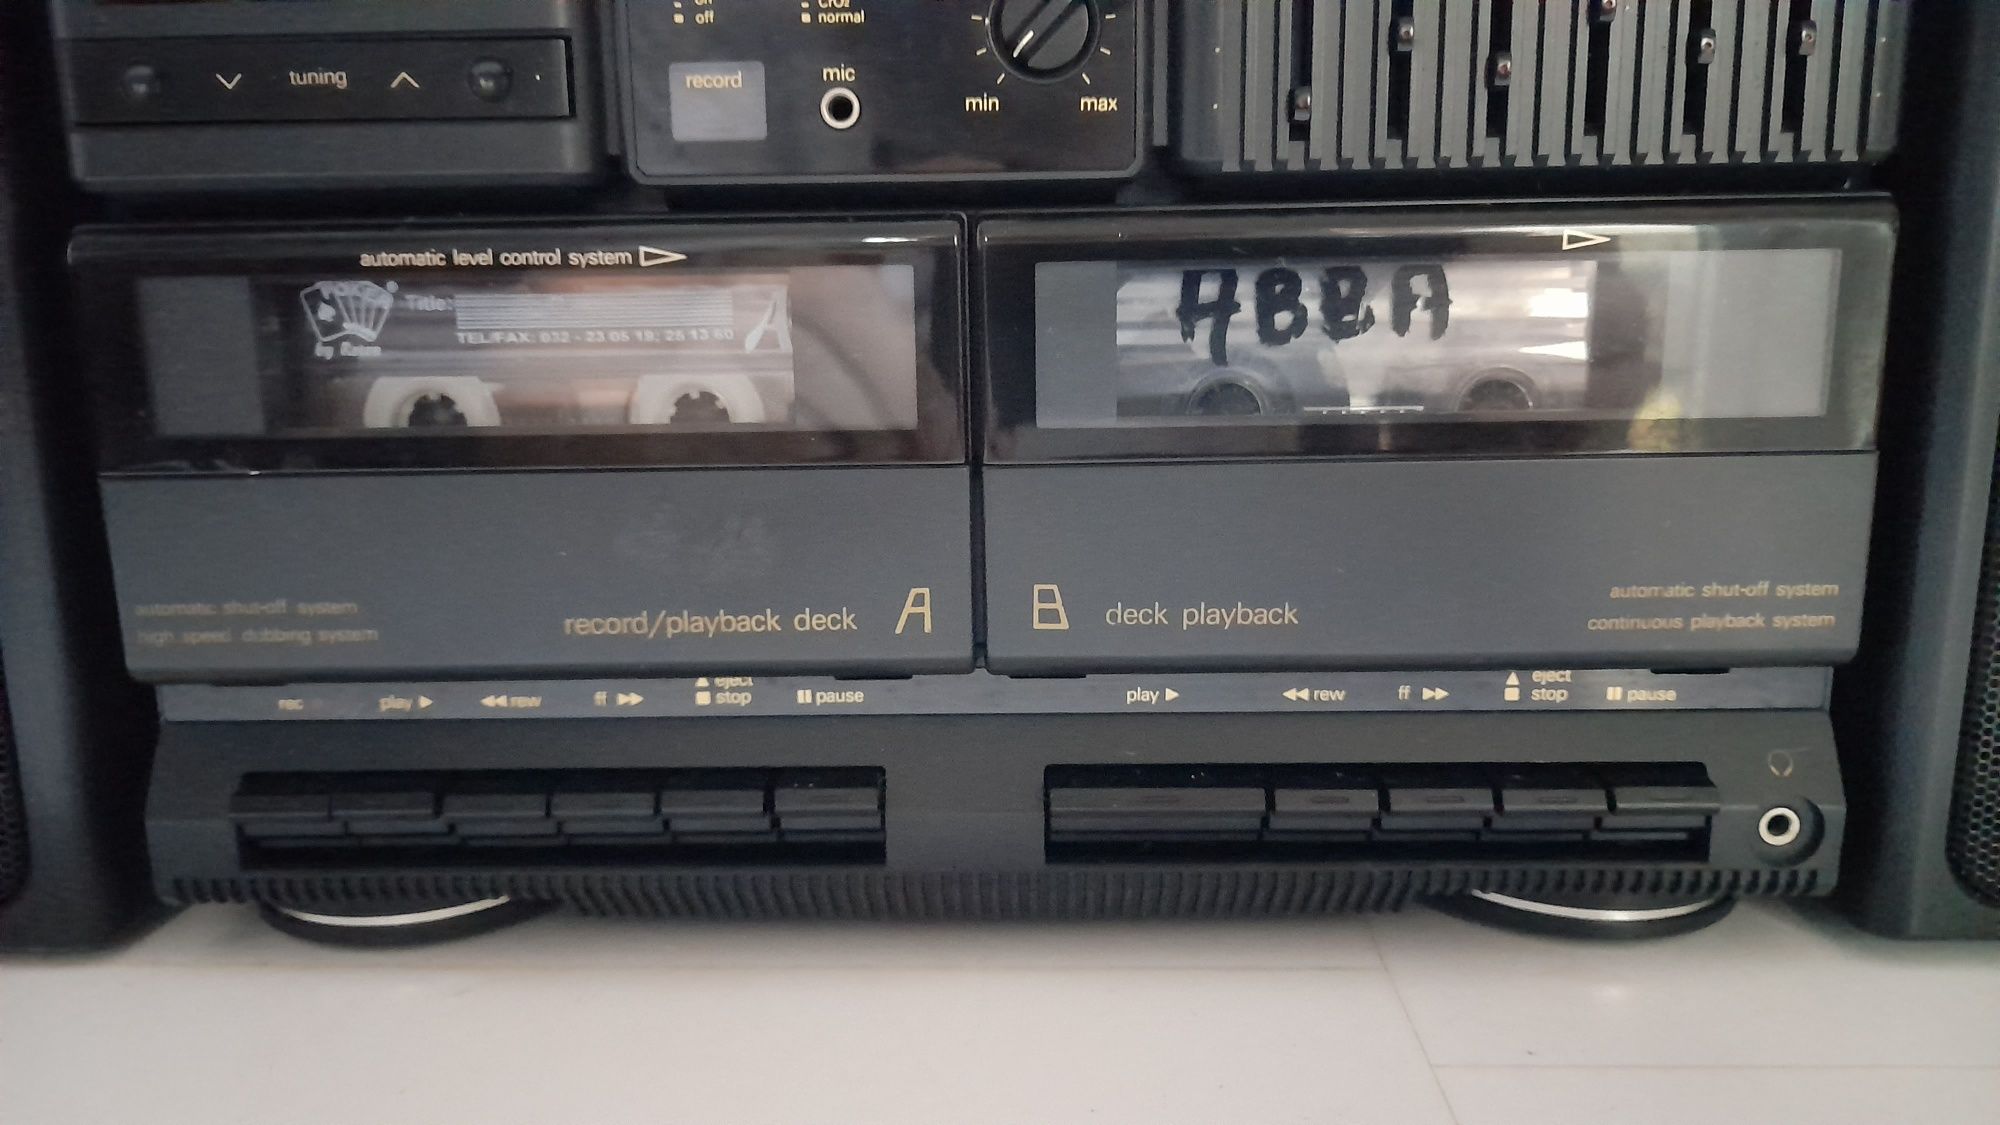 radio casetofon CD Siemens RS 175 R4